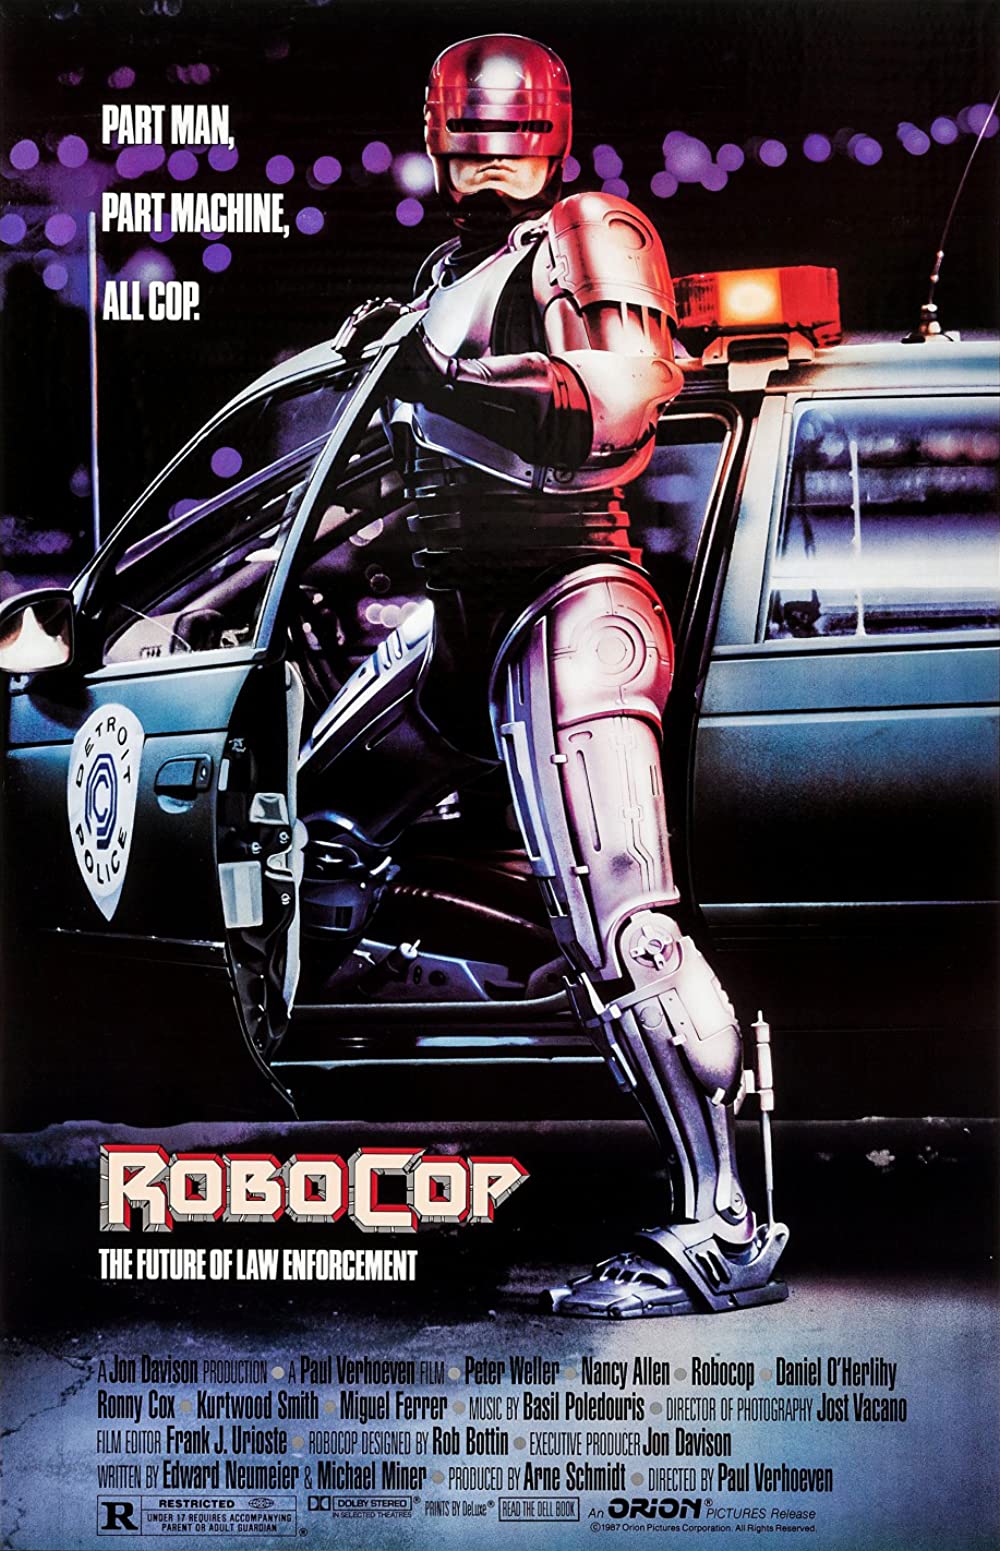 Filmbeschreibung zu Robocop